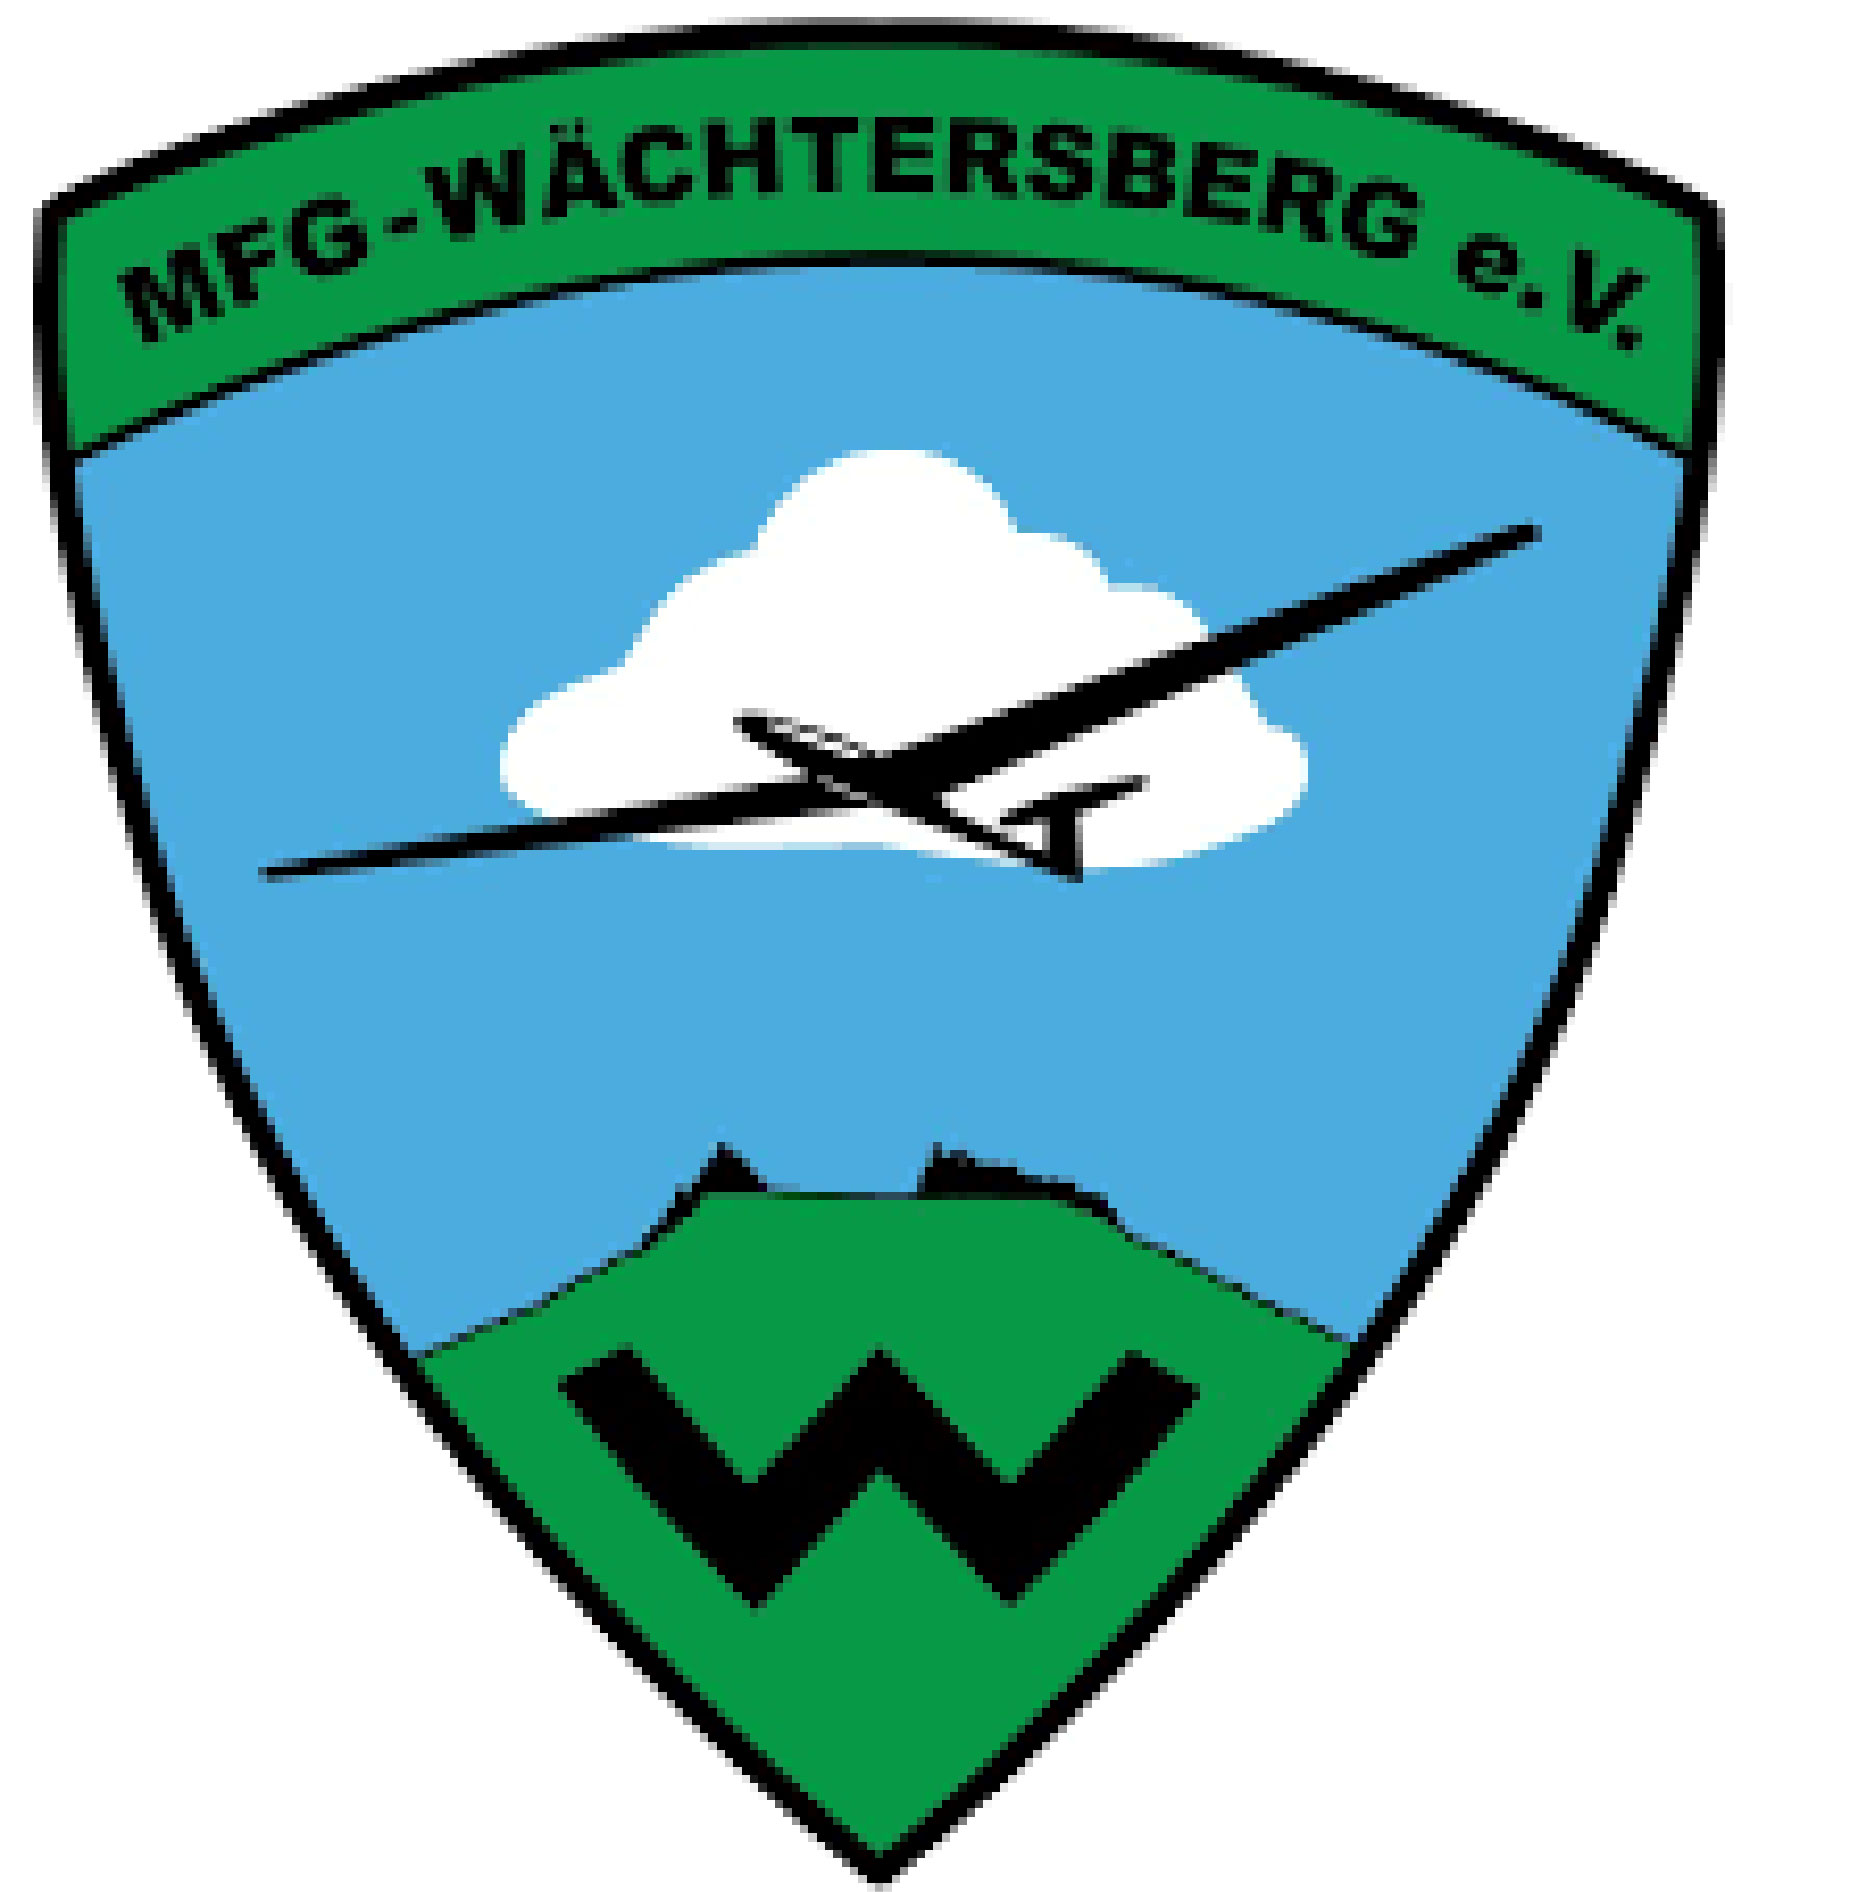 Wächtersberg